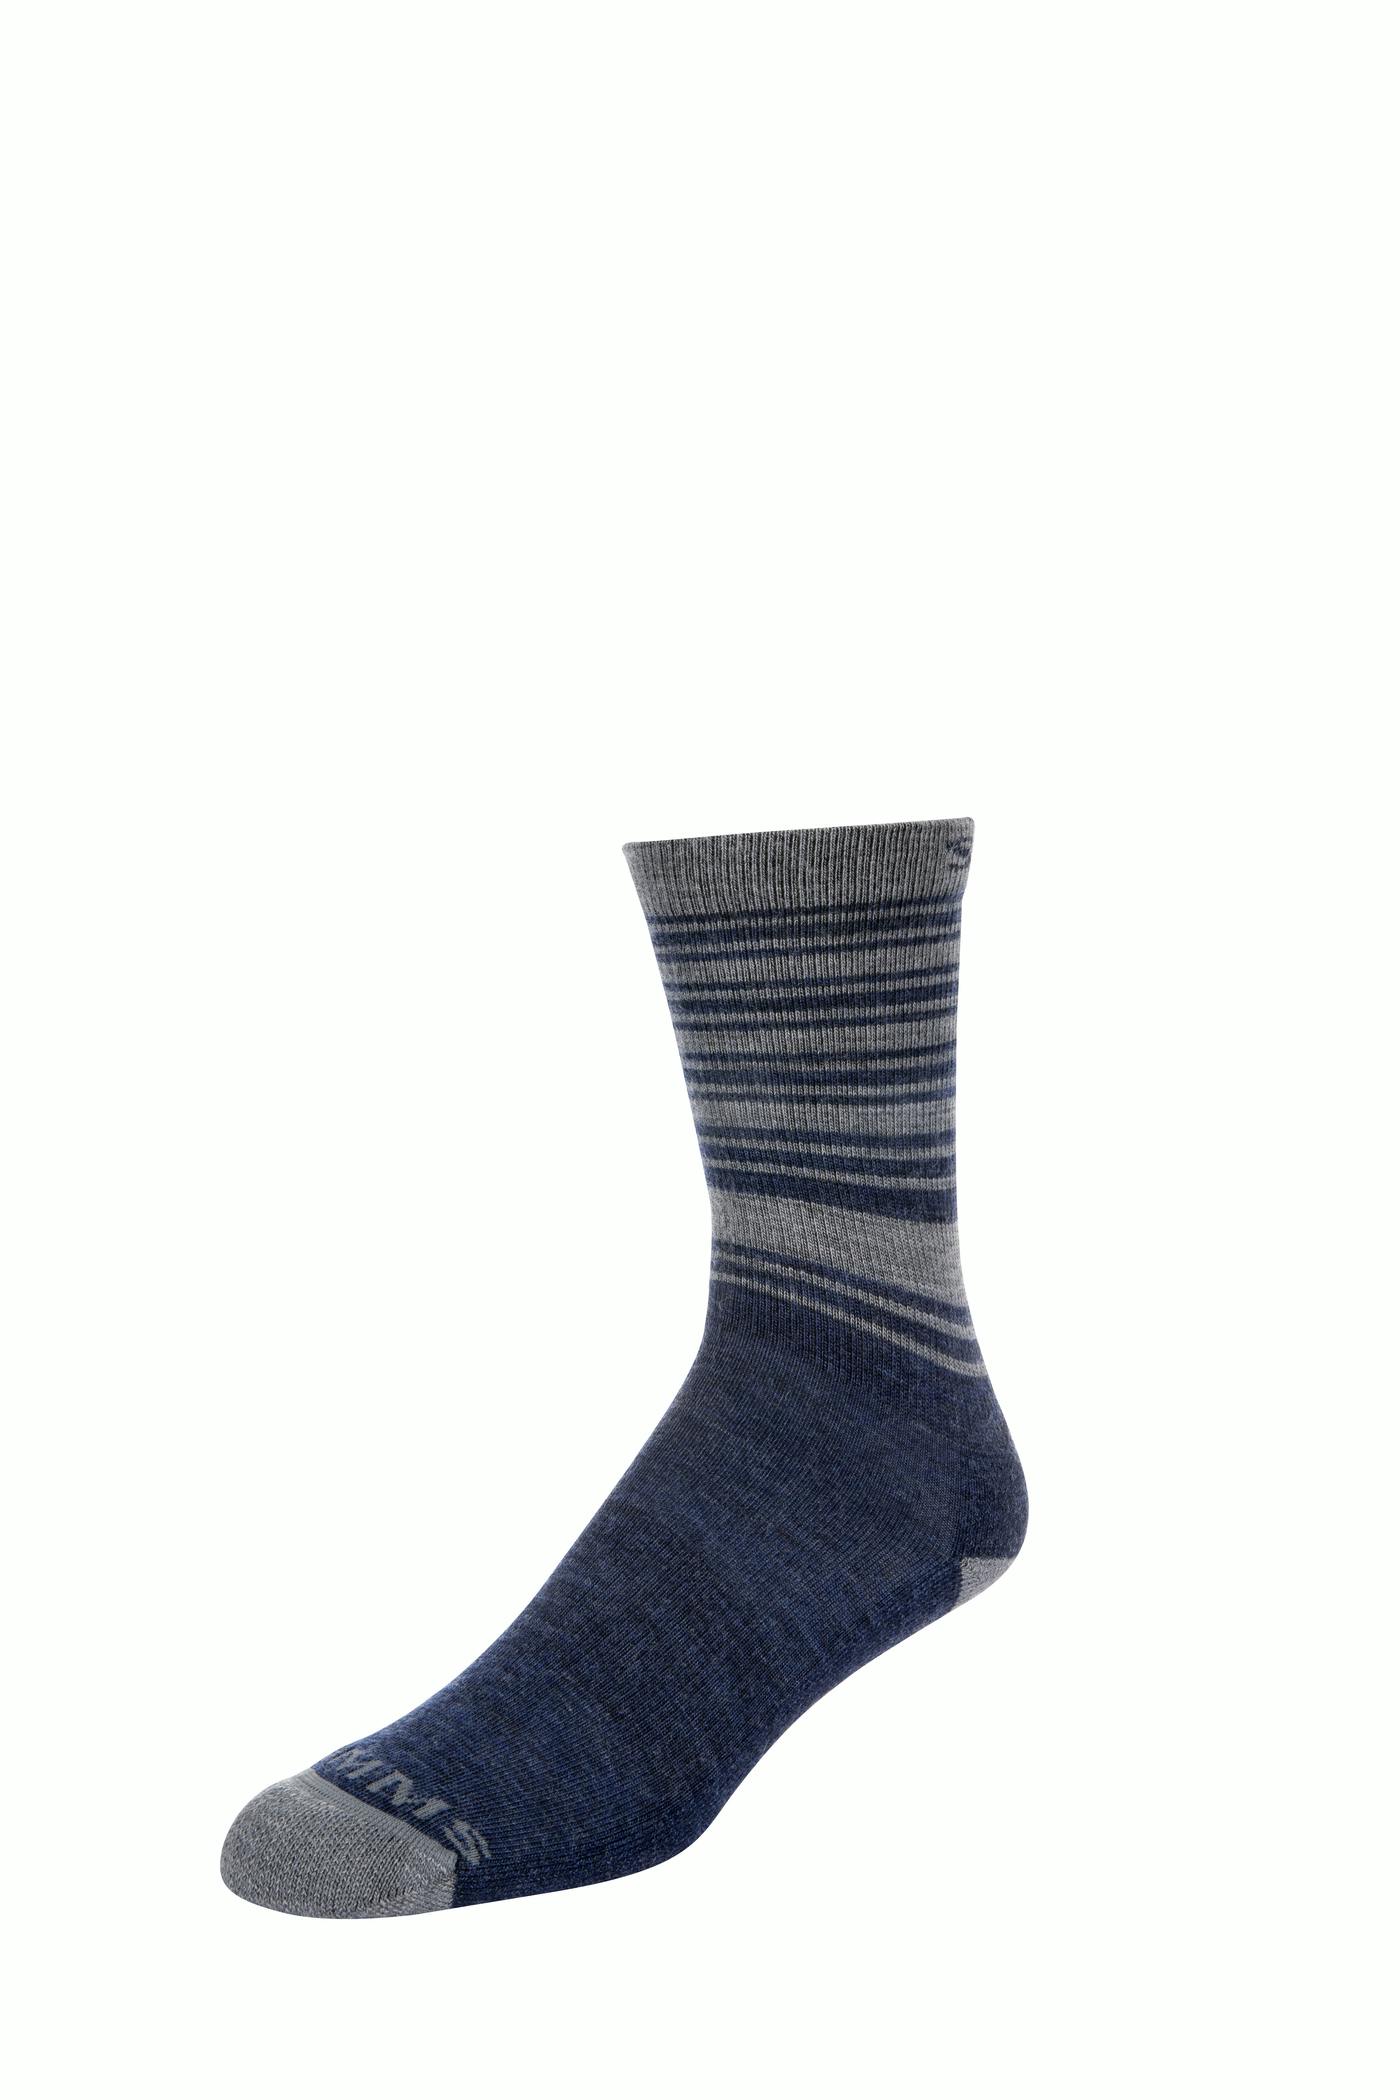 Simms Men's Merino Lightweight Hiker Sock